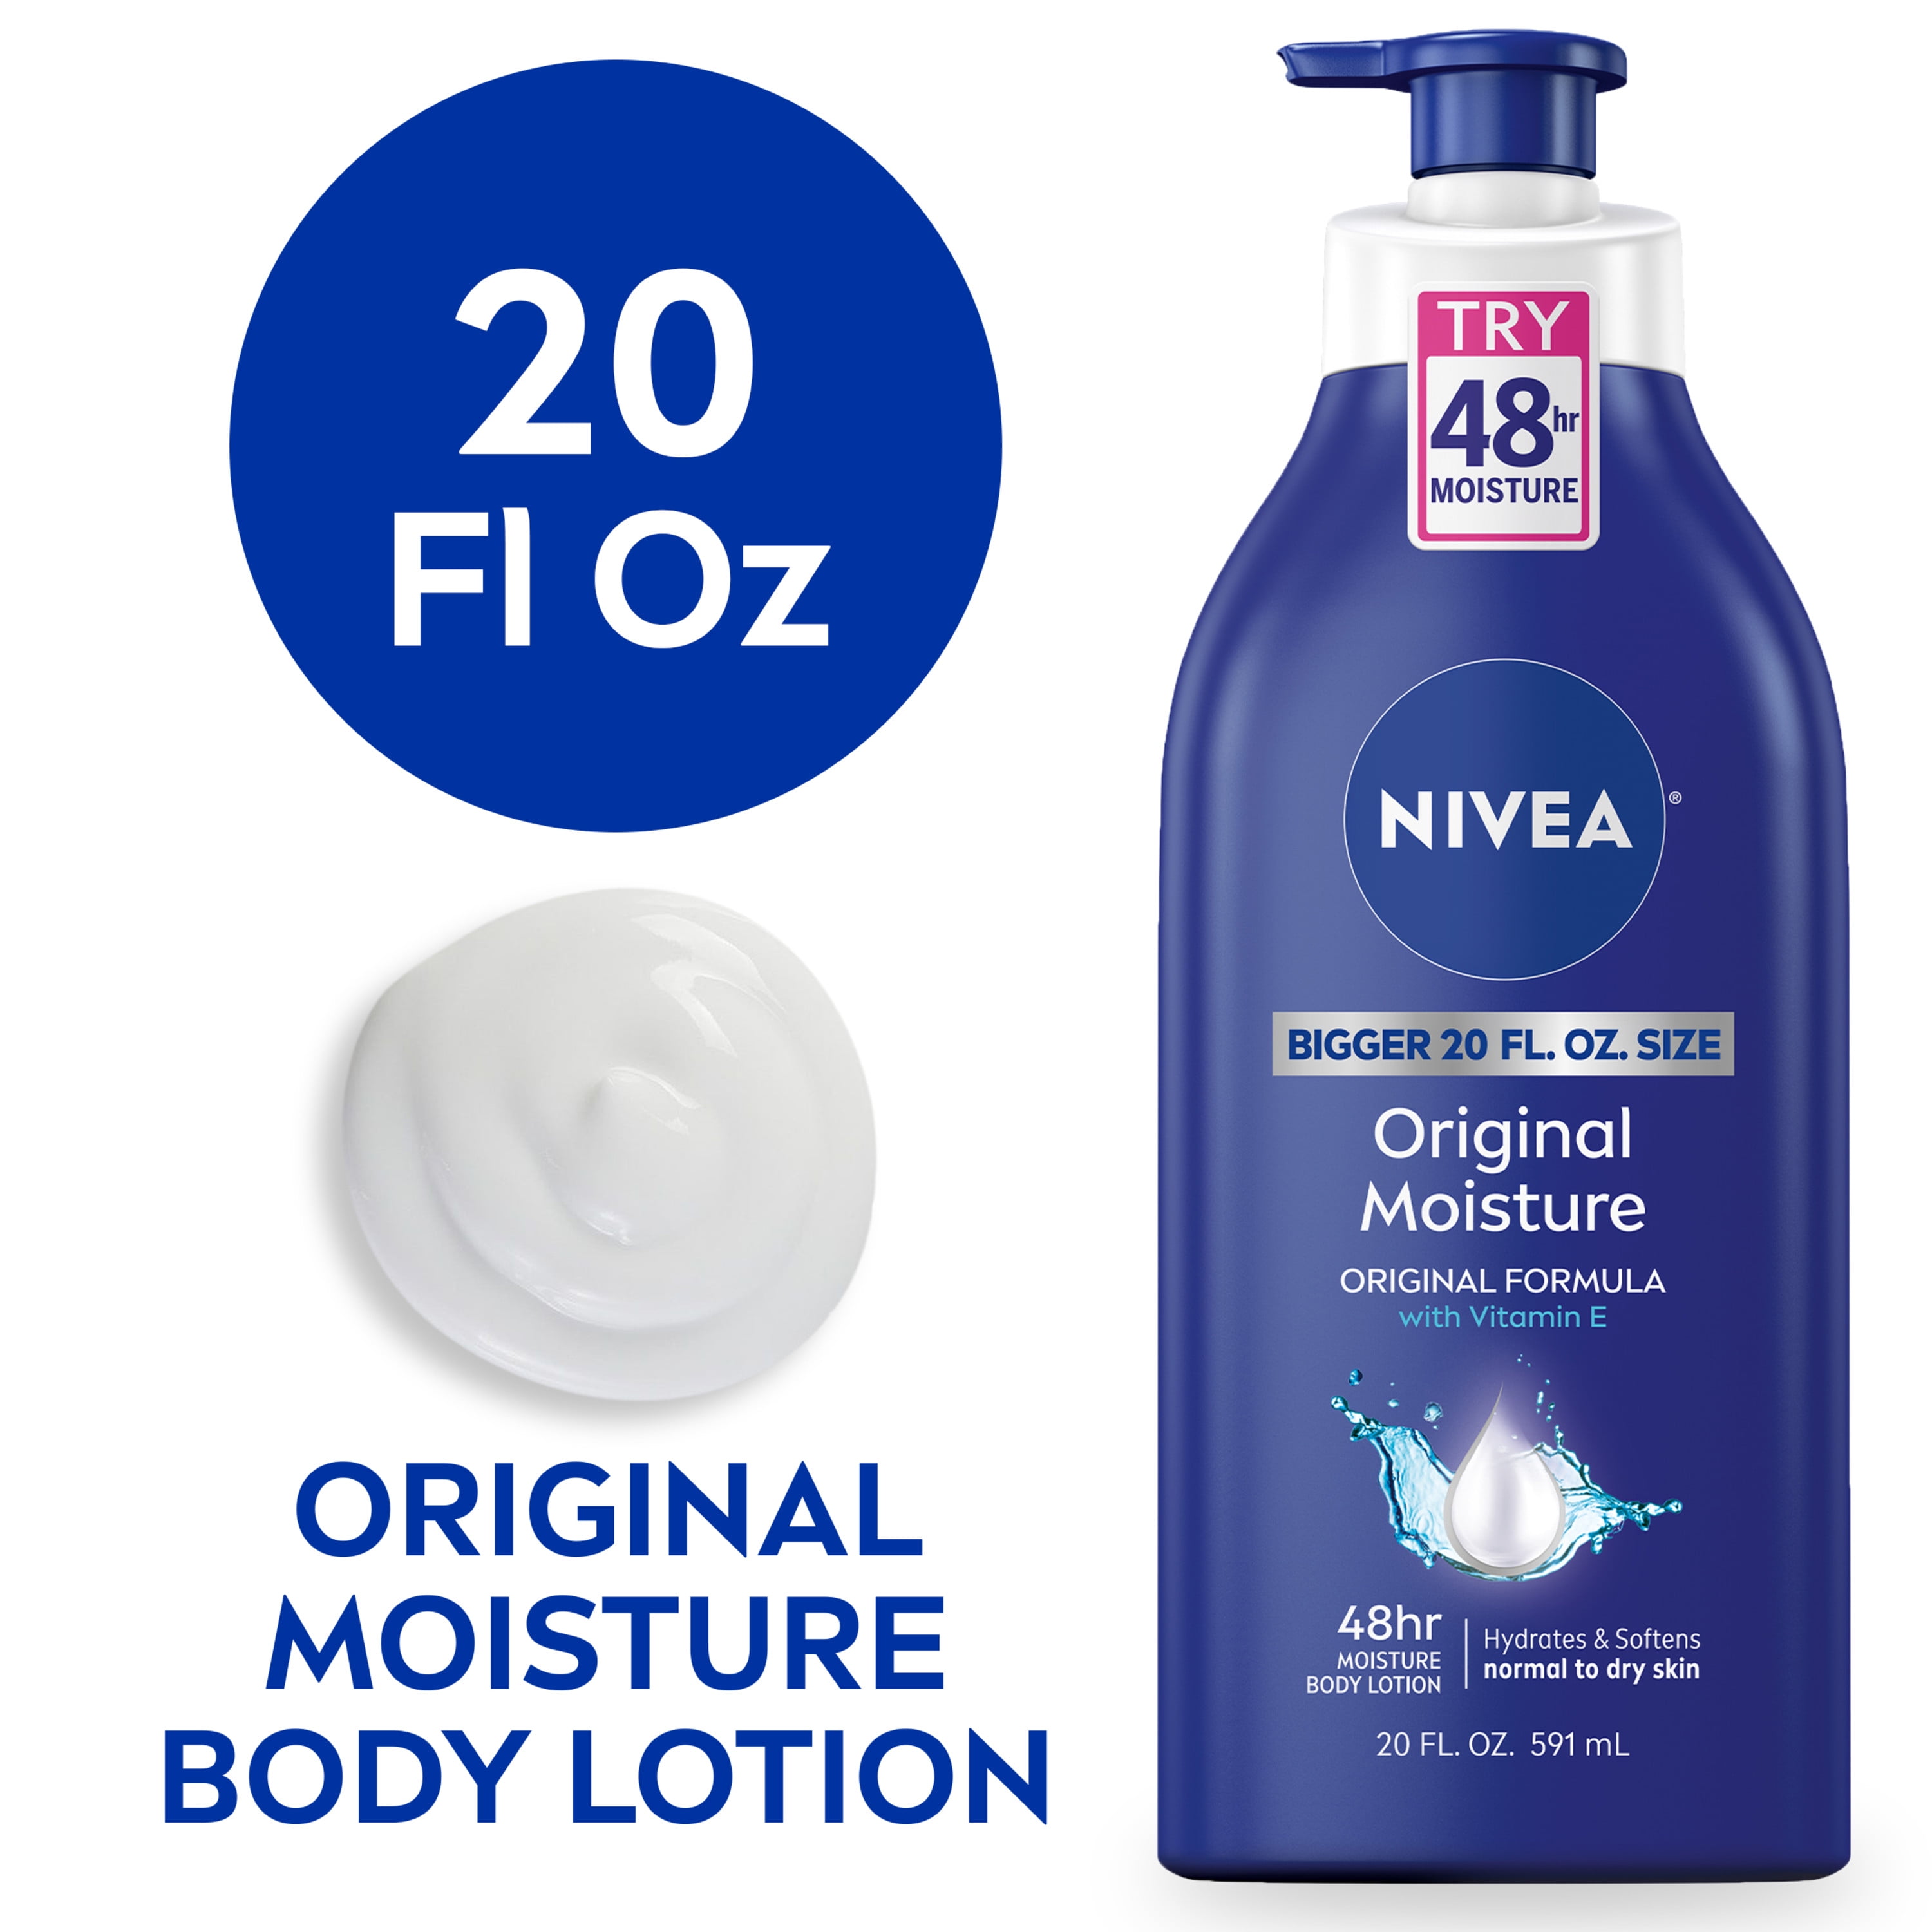 NIVEA Original Moisture Body Lotion with Vitamin E, 20 Fl Oz Pump Bottle